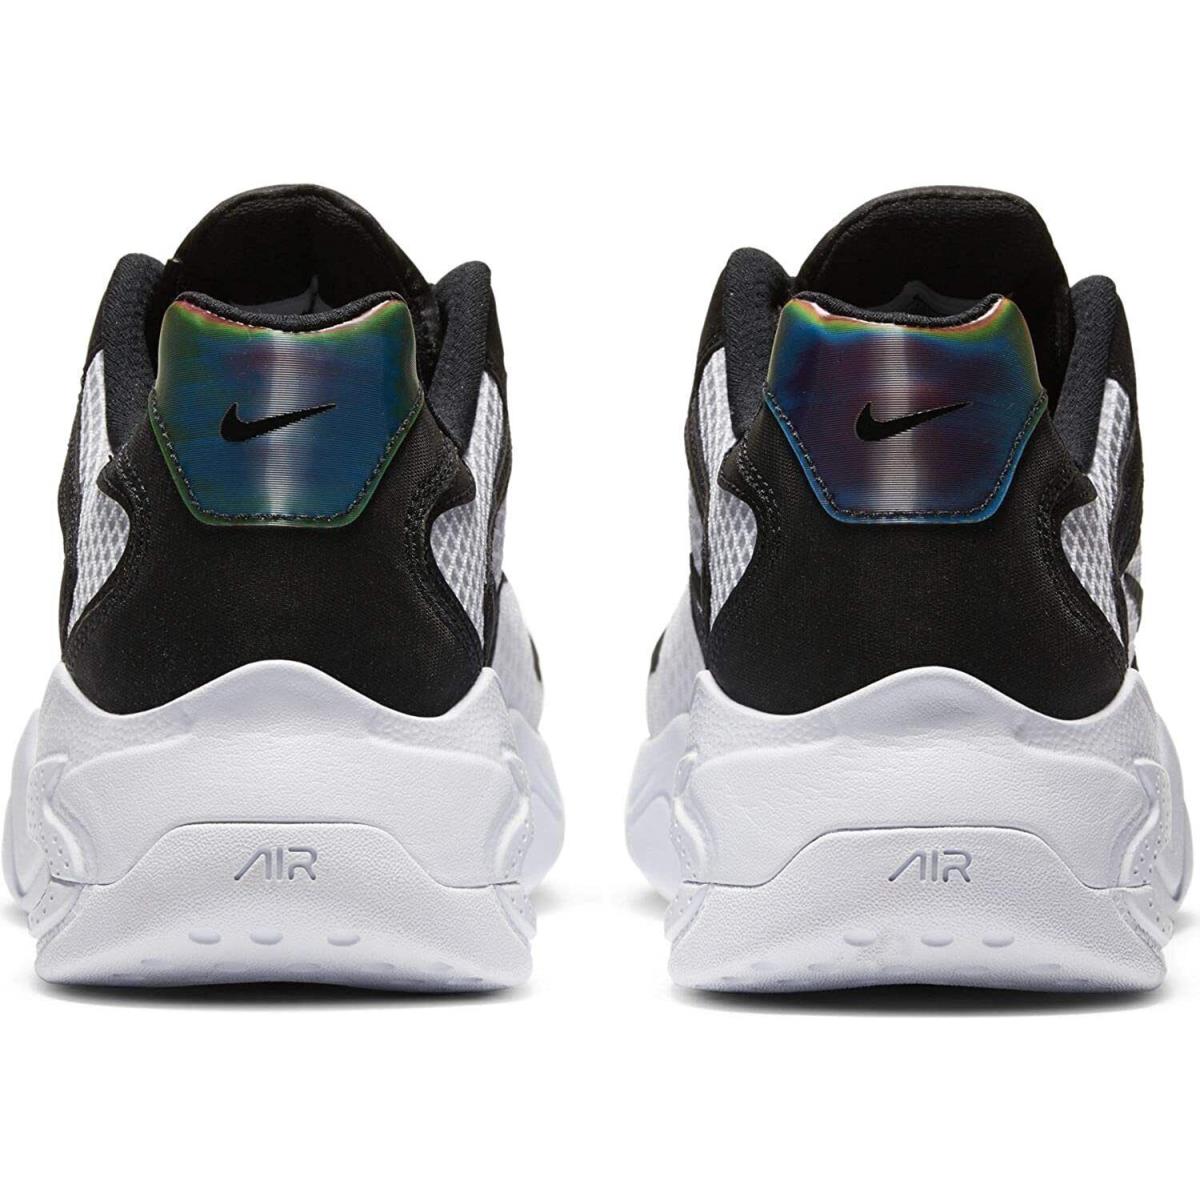 Nike shoes Air Max - Black 1